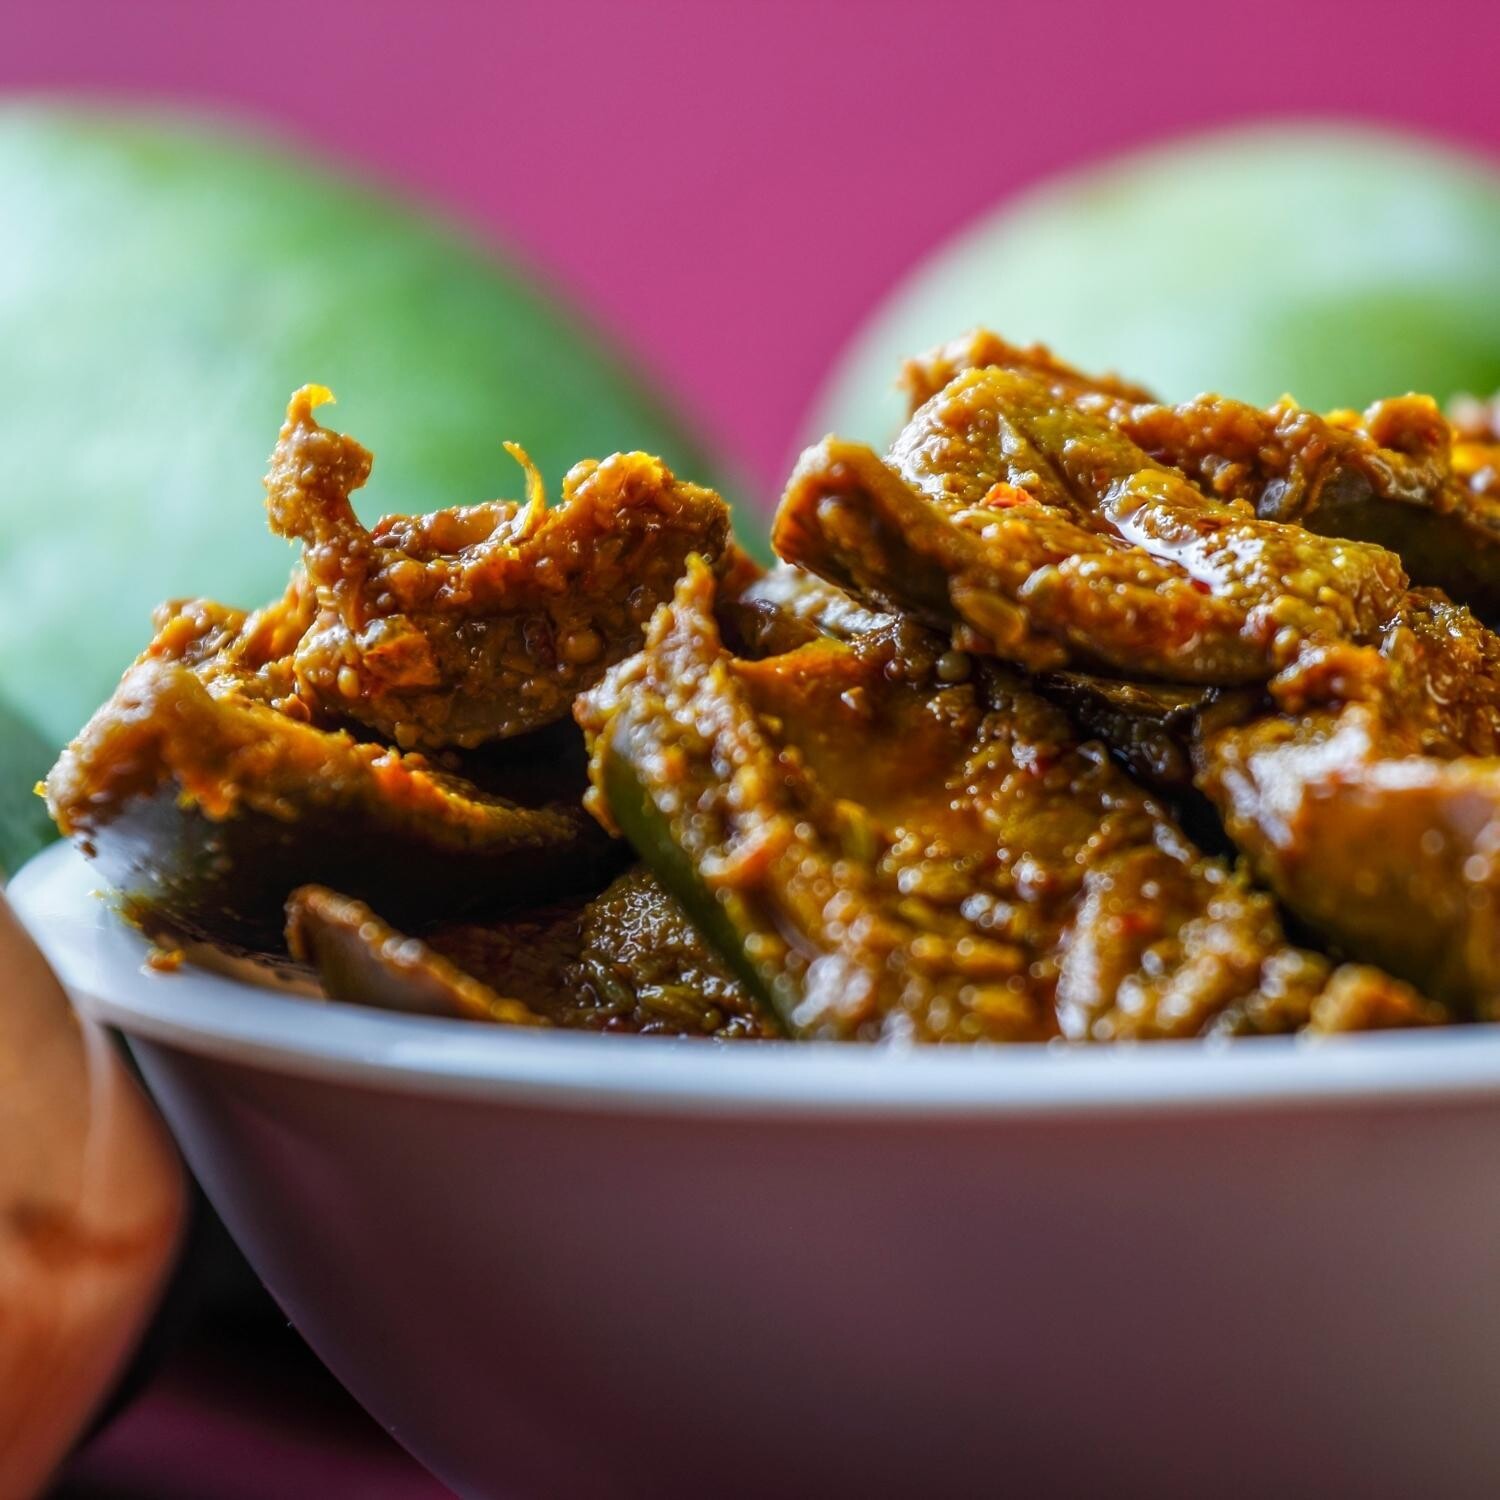 Banarasi Mango Pickle | Aam ka Achar | Spiced Mango Pickle | Original Home Made Taste with Mustard Oil | Pantry Must Have | 400GM | Pack of 1